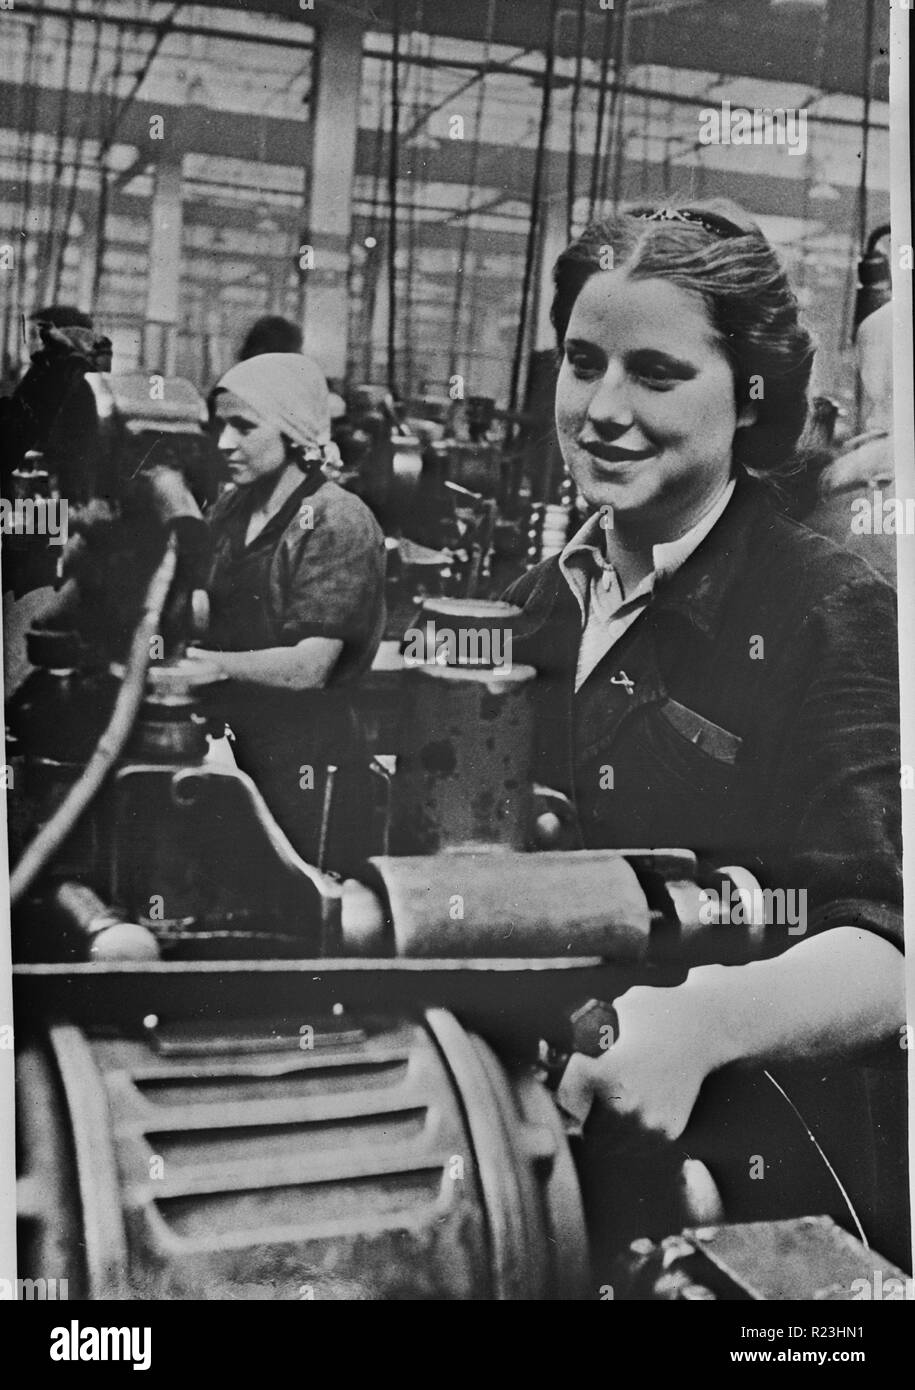 Women handling lathe in a factory in the USSR (Union of Soviet Socialist Republics) c.1940 Stock Photo